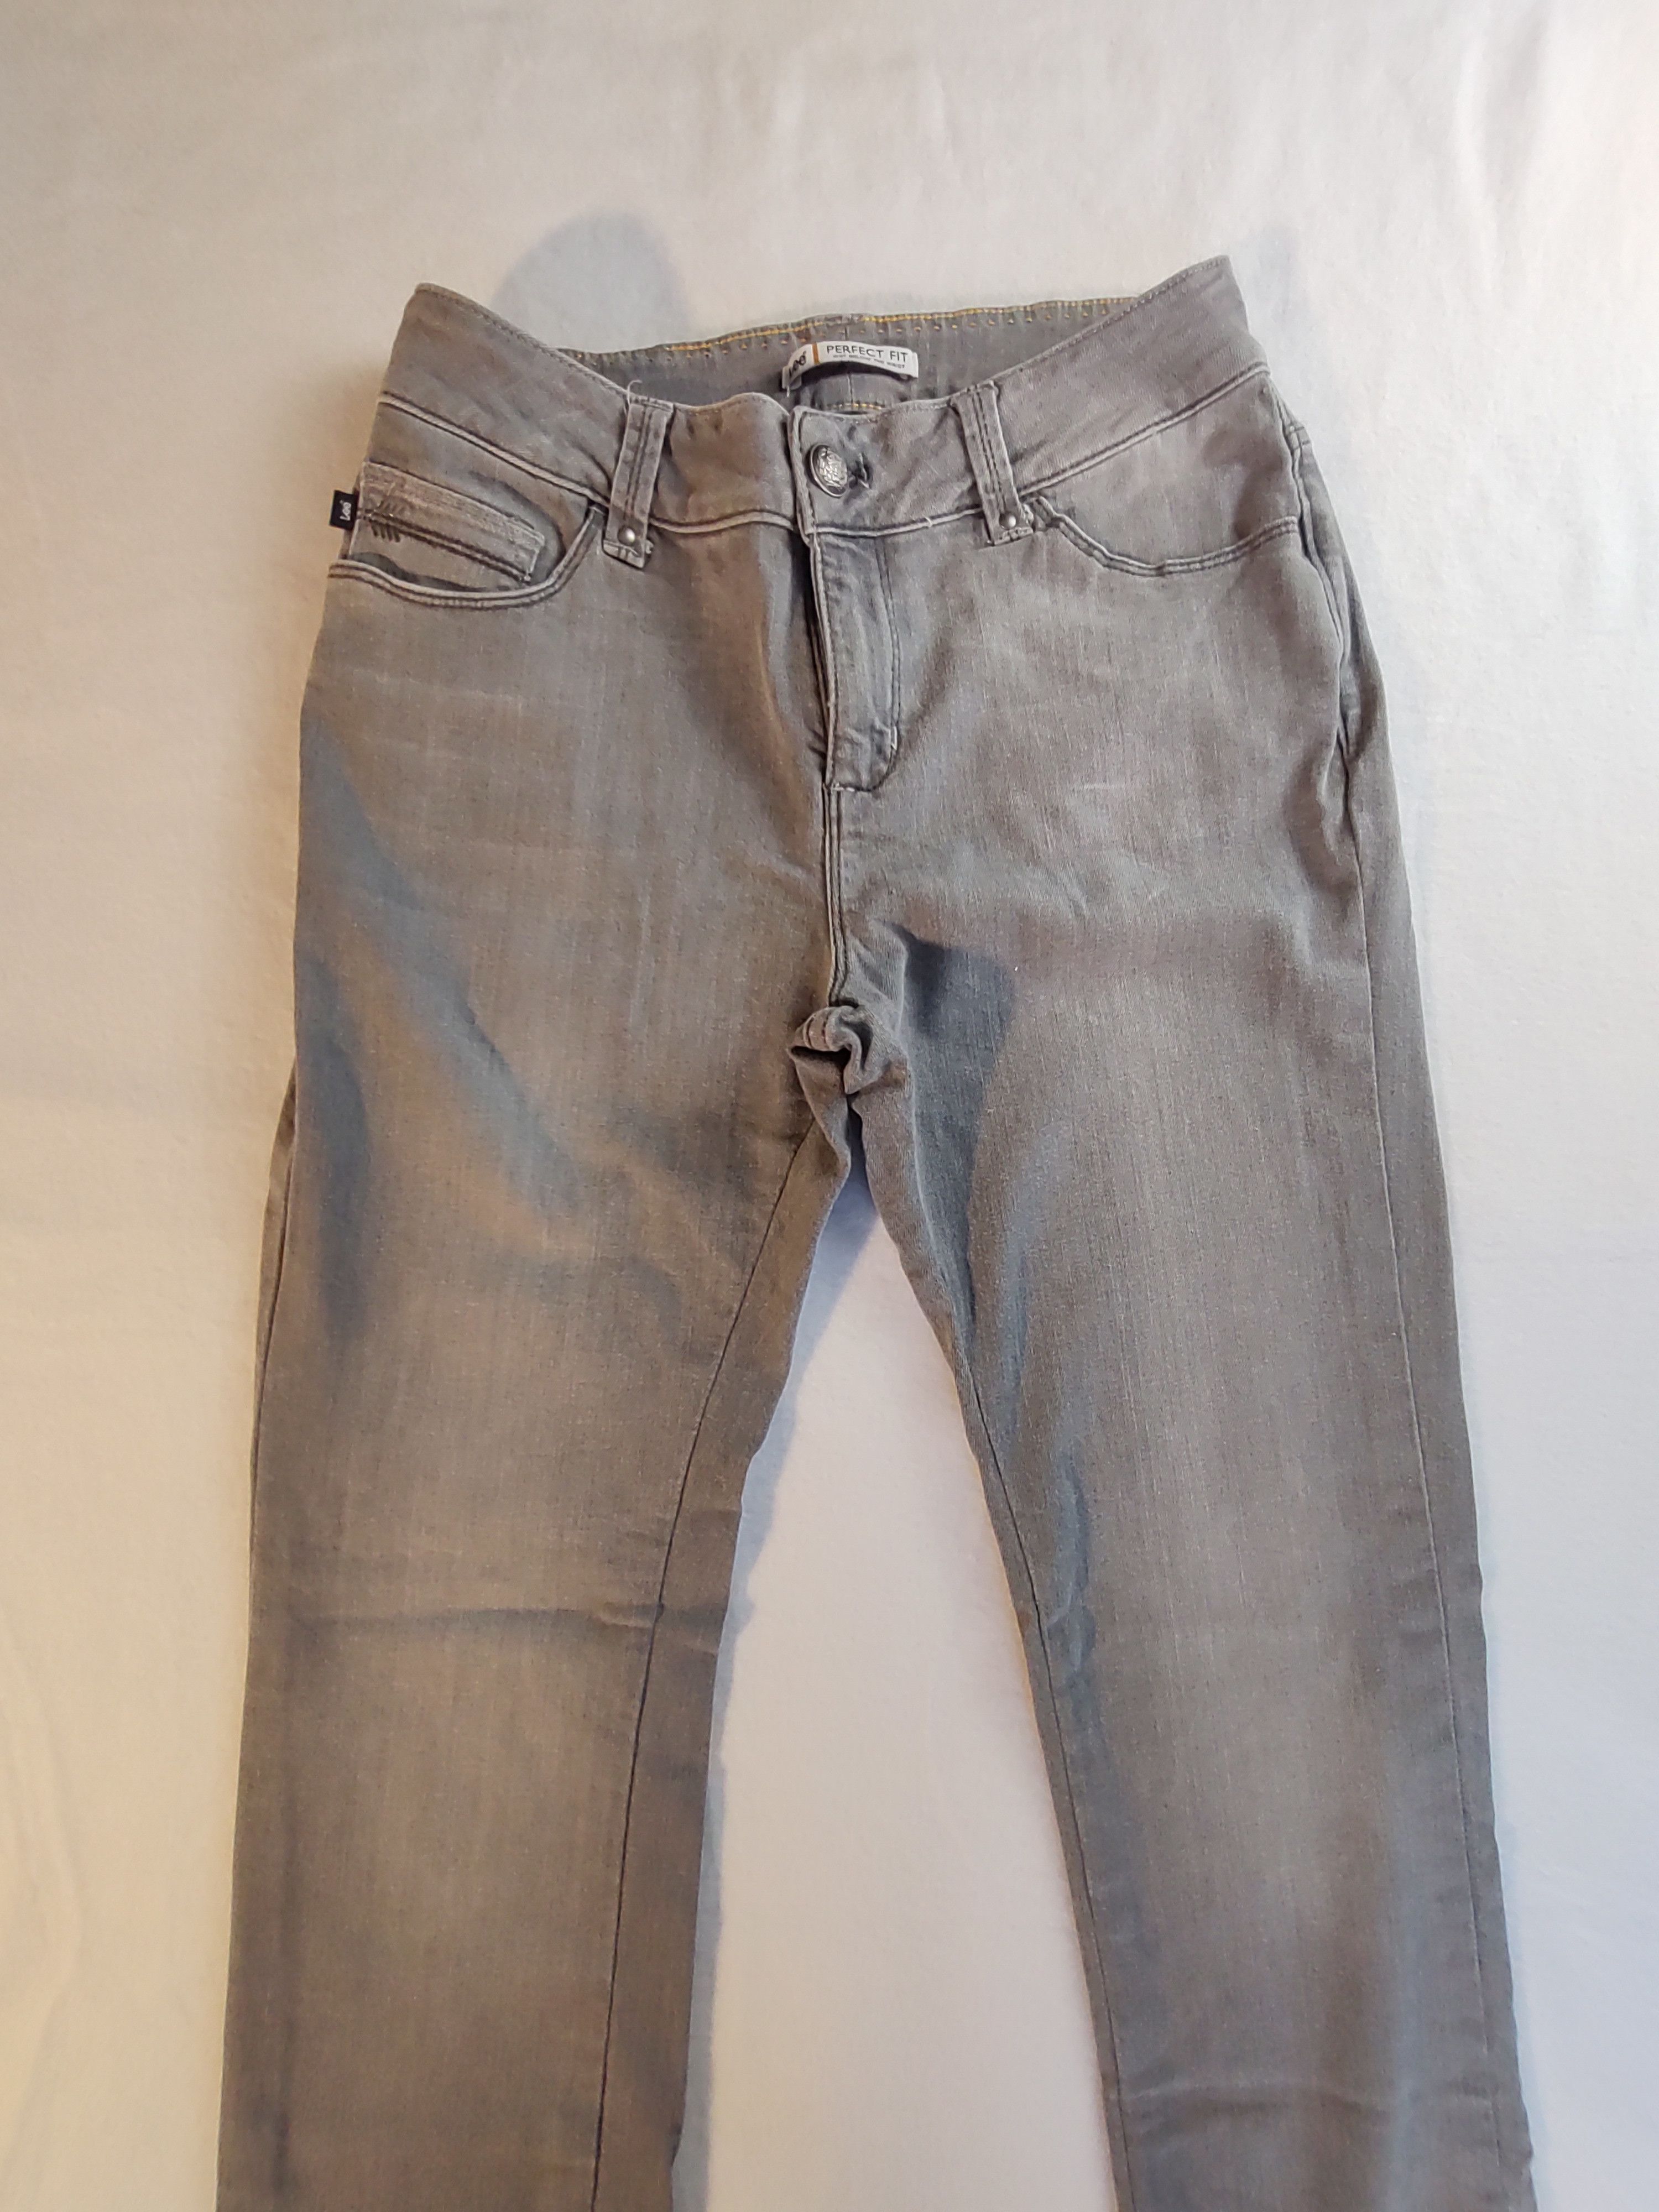 Lee Lee Perfect Fit Just Below Waist denim jeans gray ash wash Size 28" / US 6 / IT 42 - 14 Thumbnail